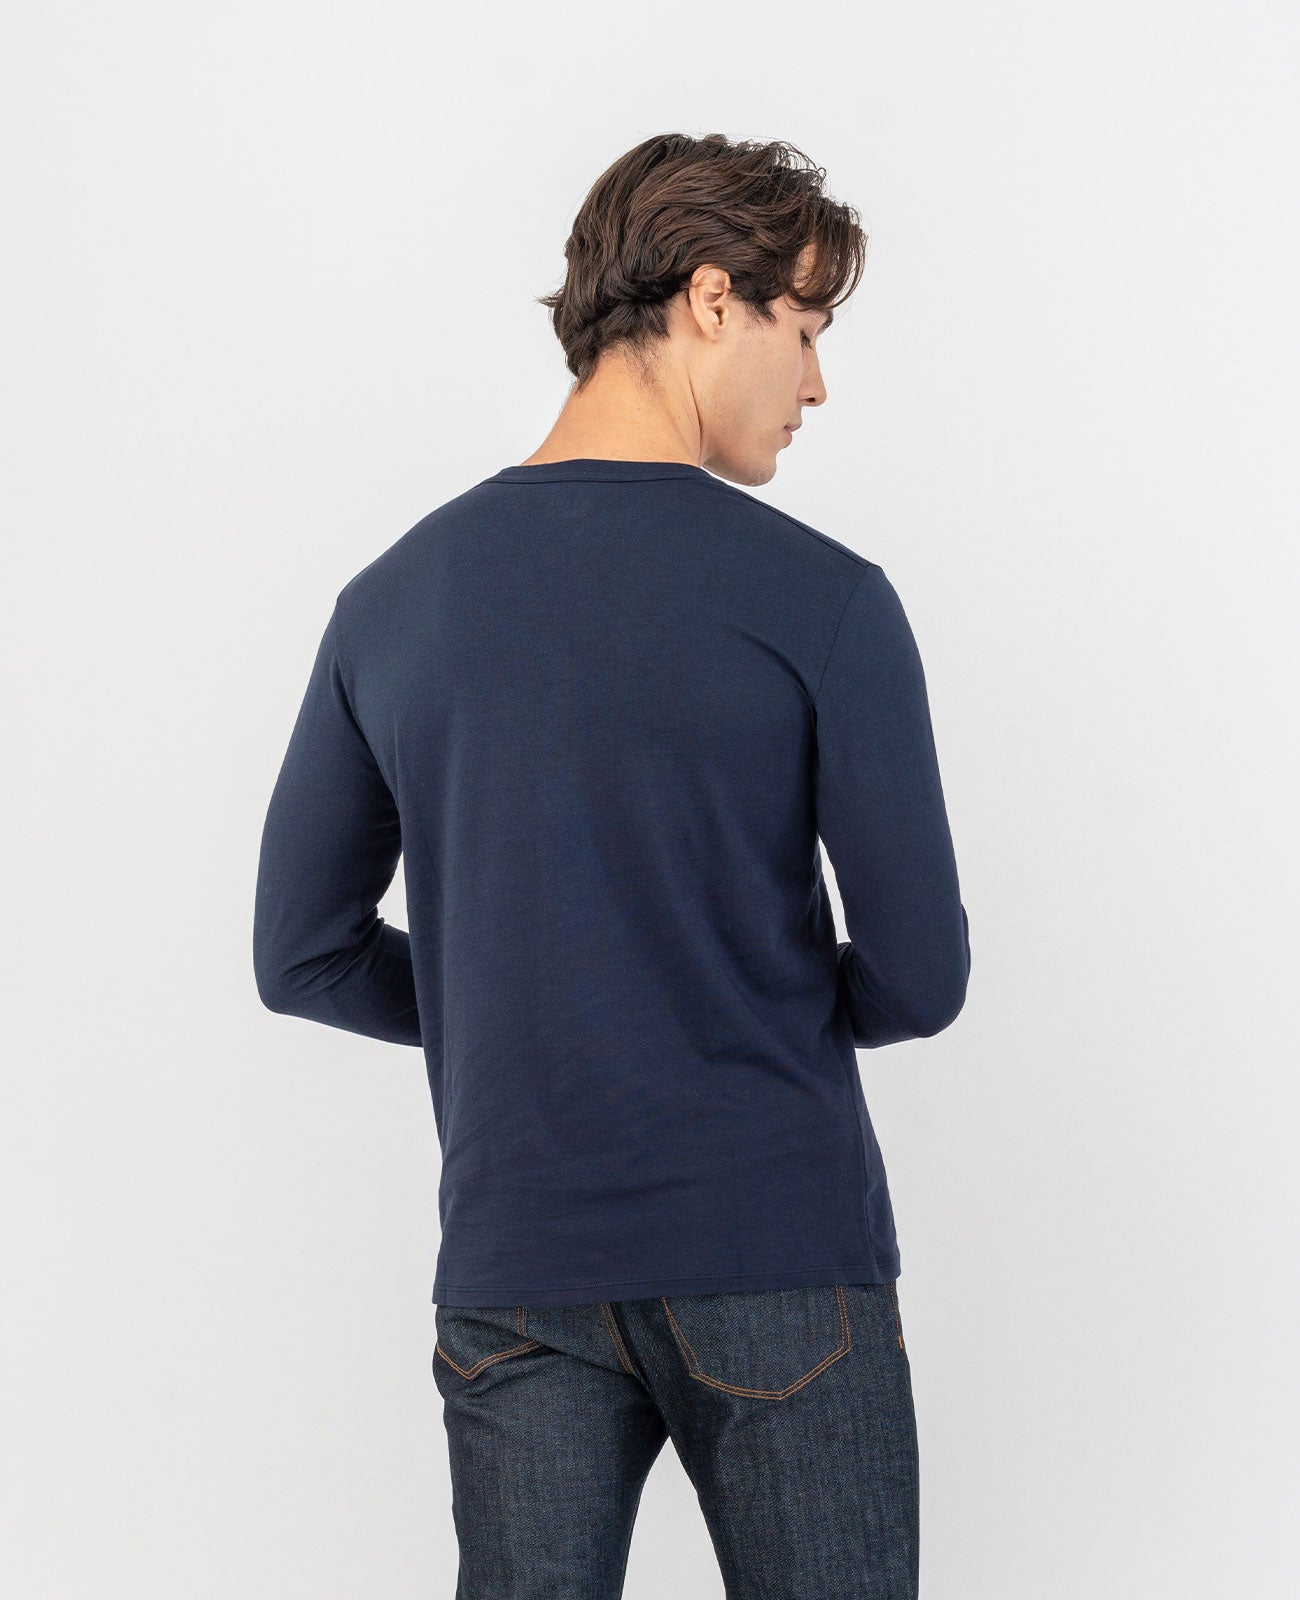 REMI RELIEF Melange Super Padded Jersey Henley Neck Pocket T-Shirt / Long  Sleeve